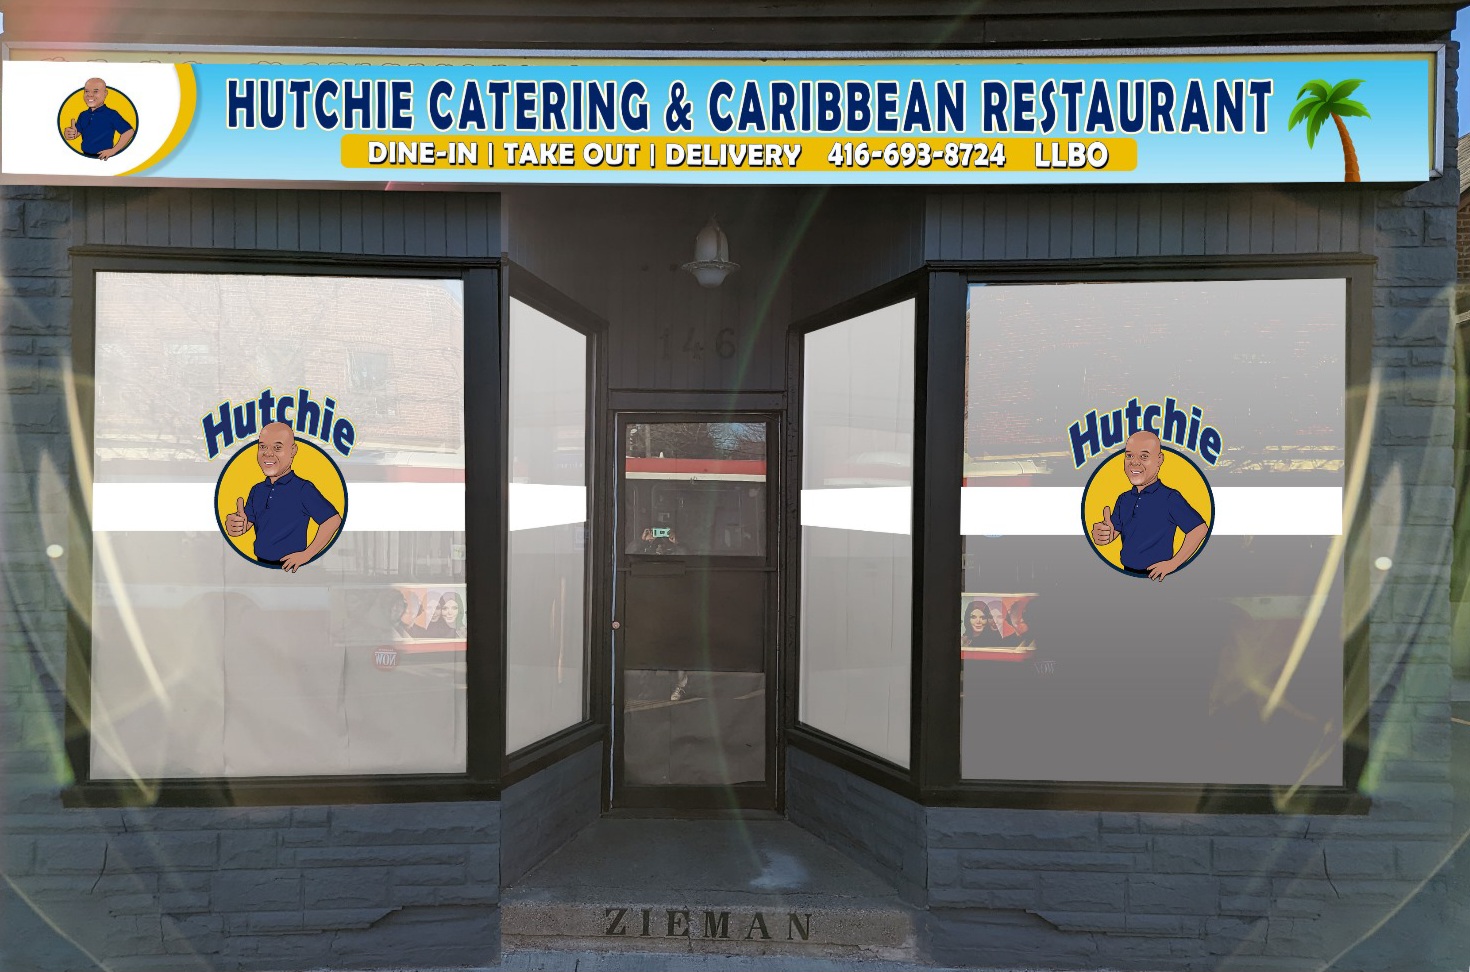 Hutchie Catering & Caribbean Restaurant